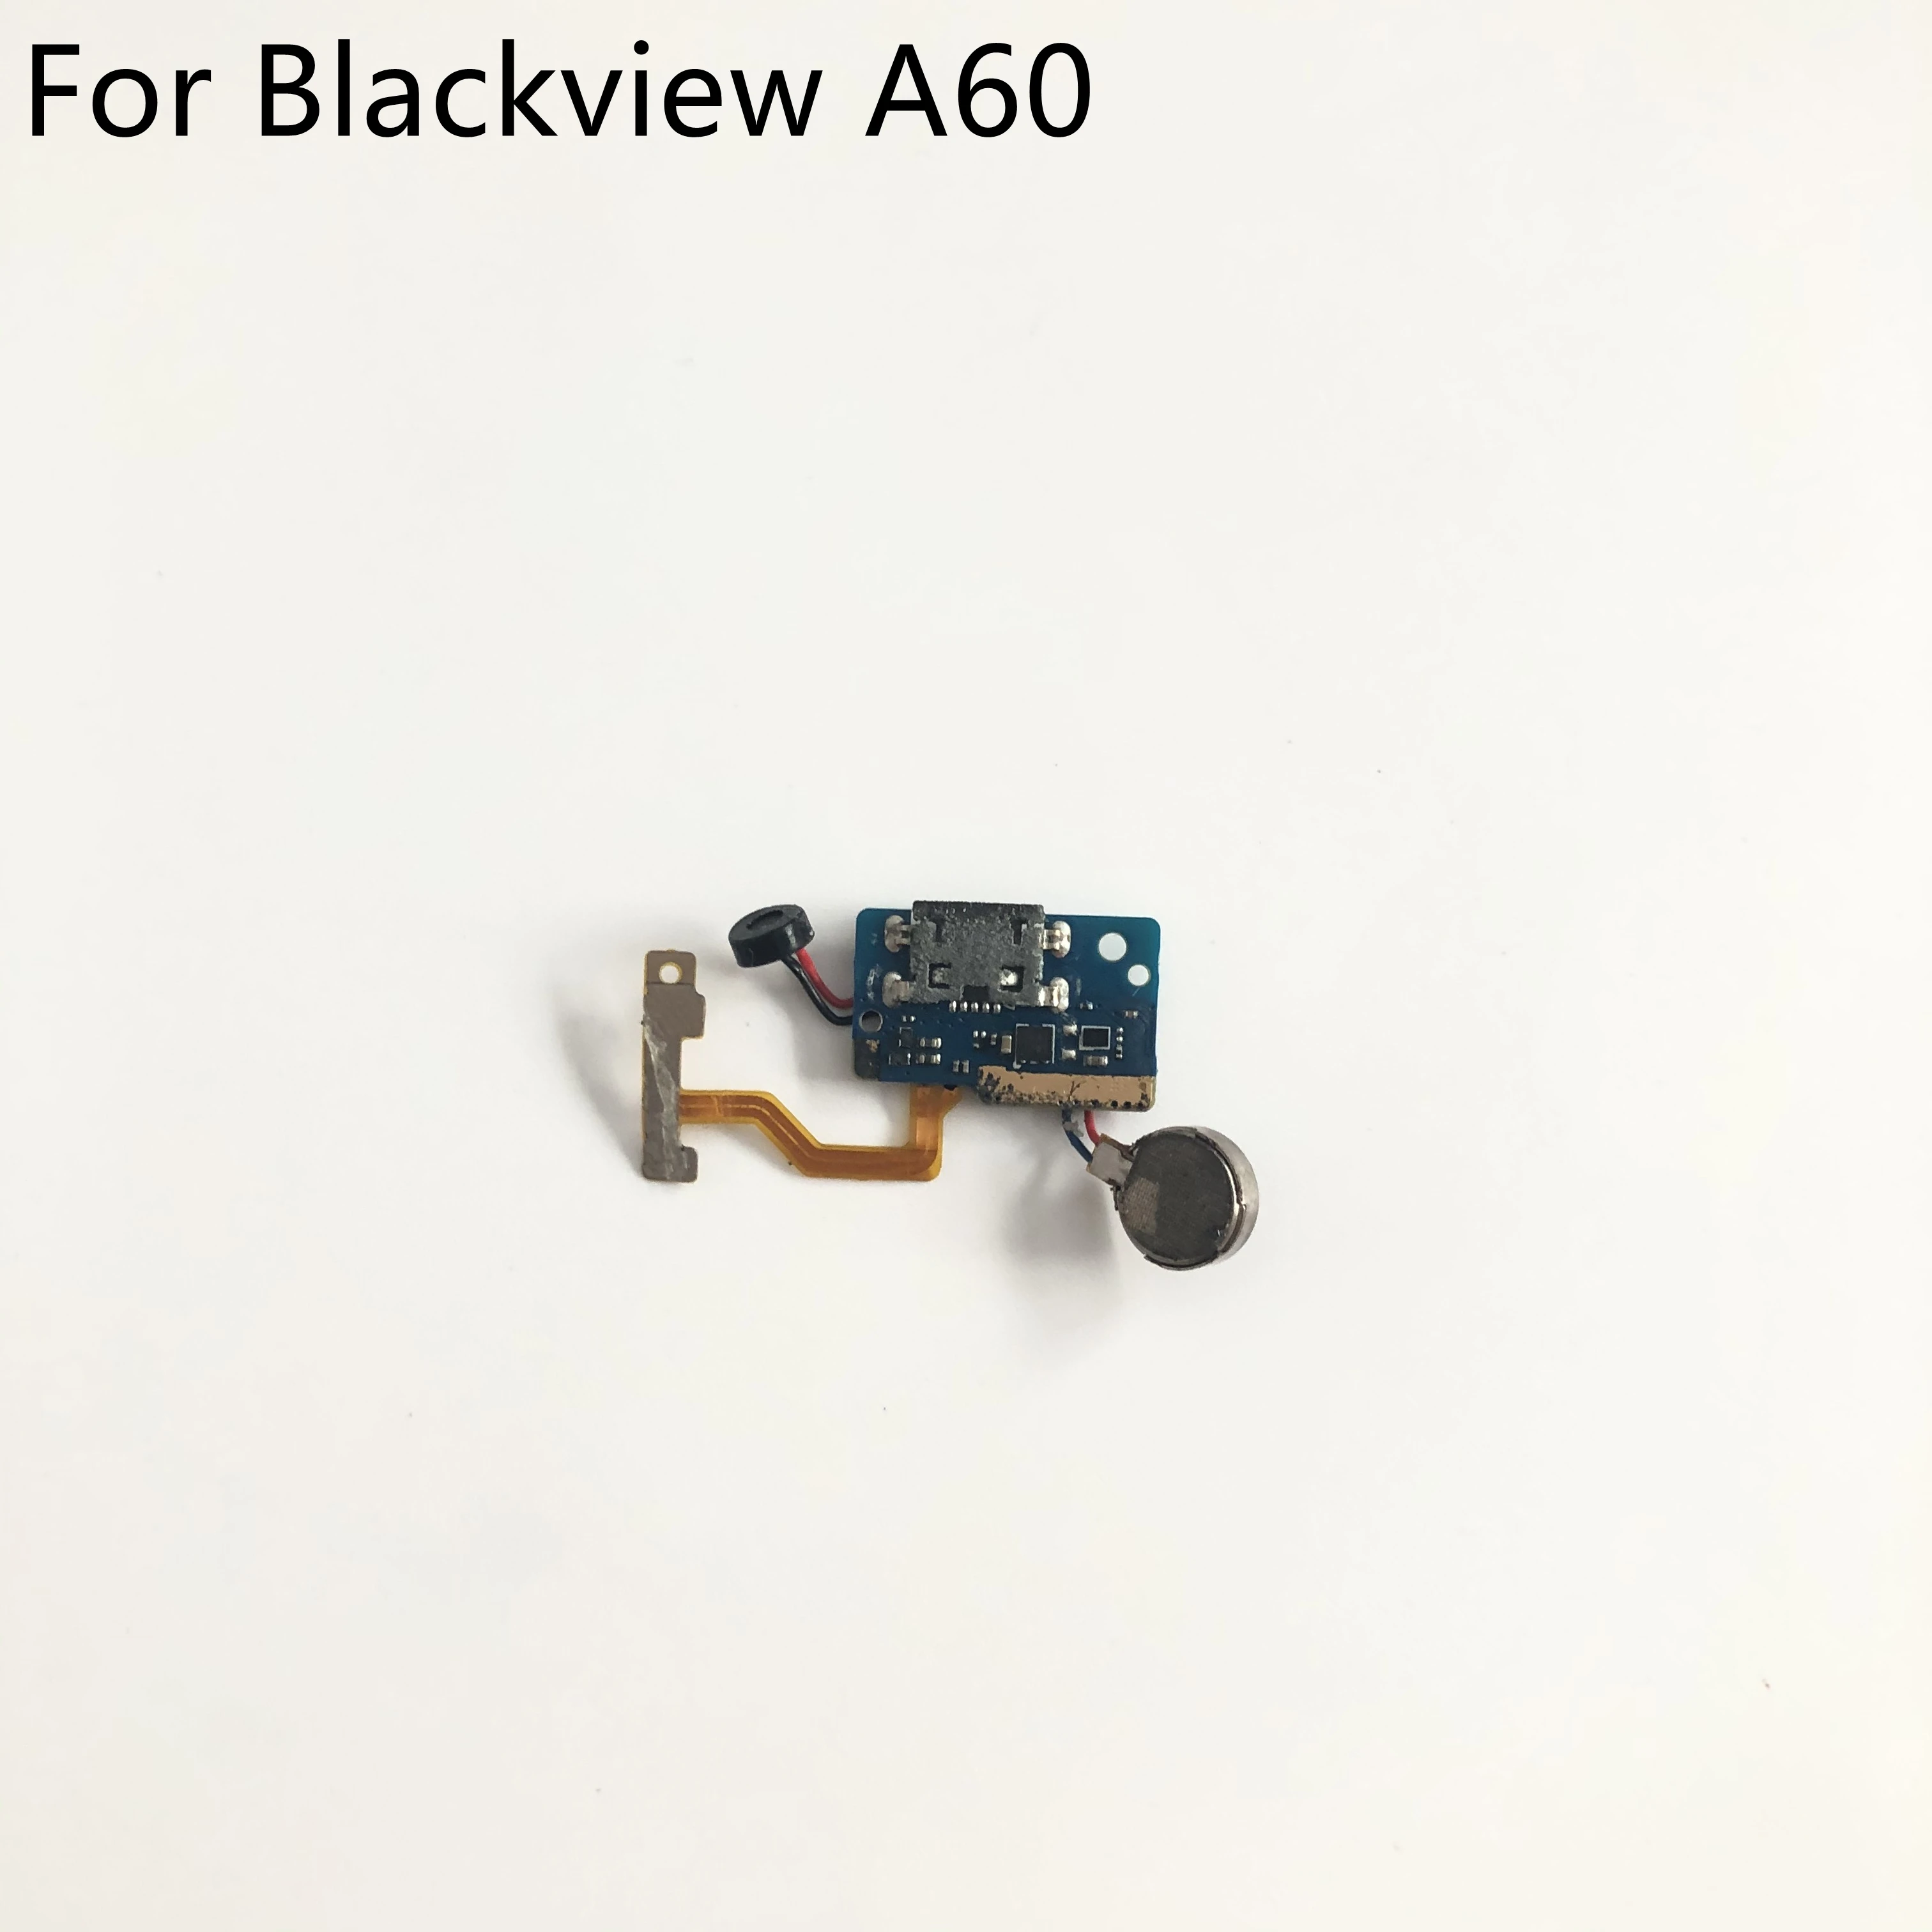 

Blackview A60 USB Plug Charge Board + Vibration Motor For Blackview A60 MT6580 Quad core 6.1" 1280*600 Smartphone